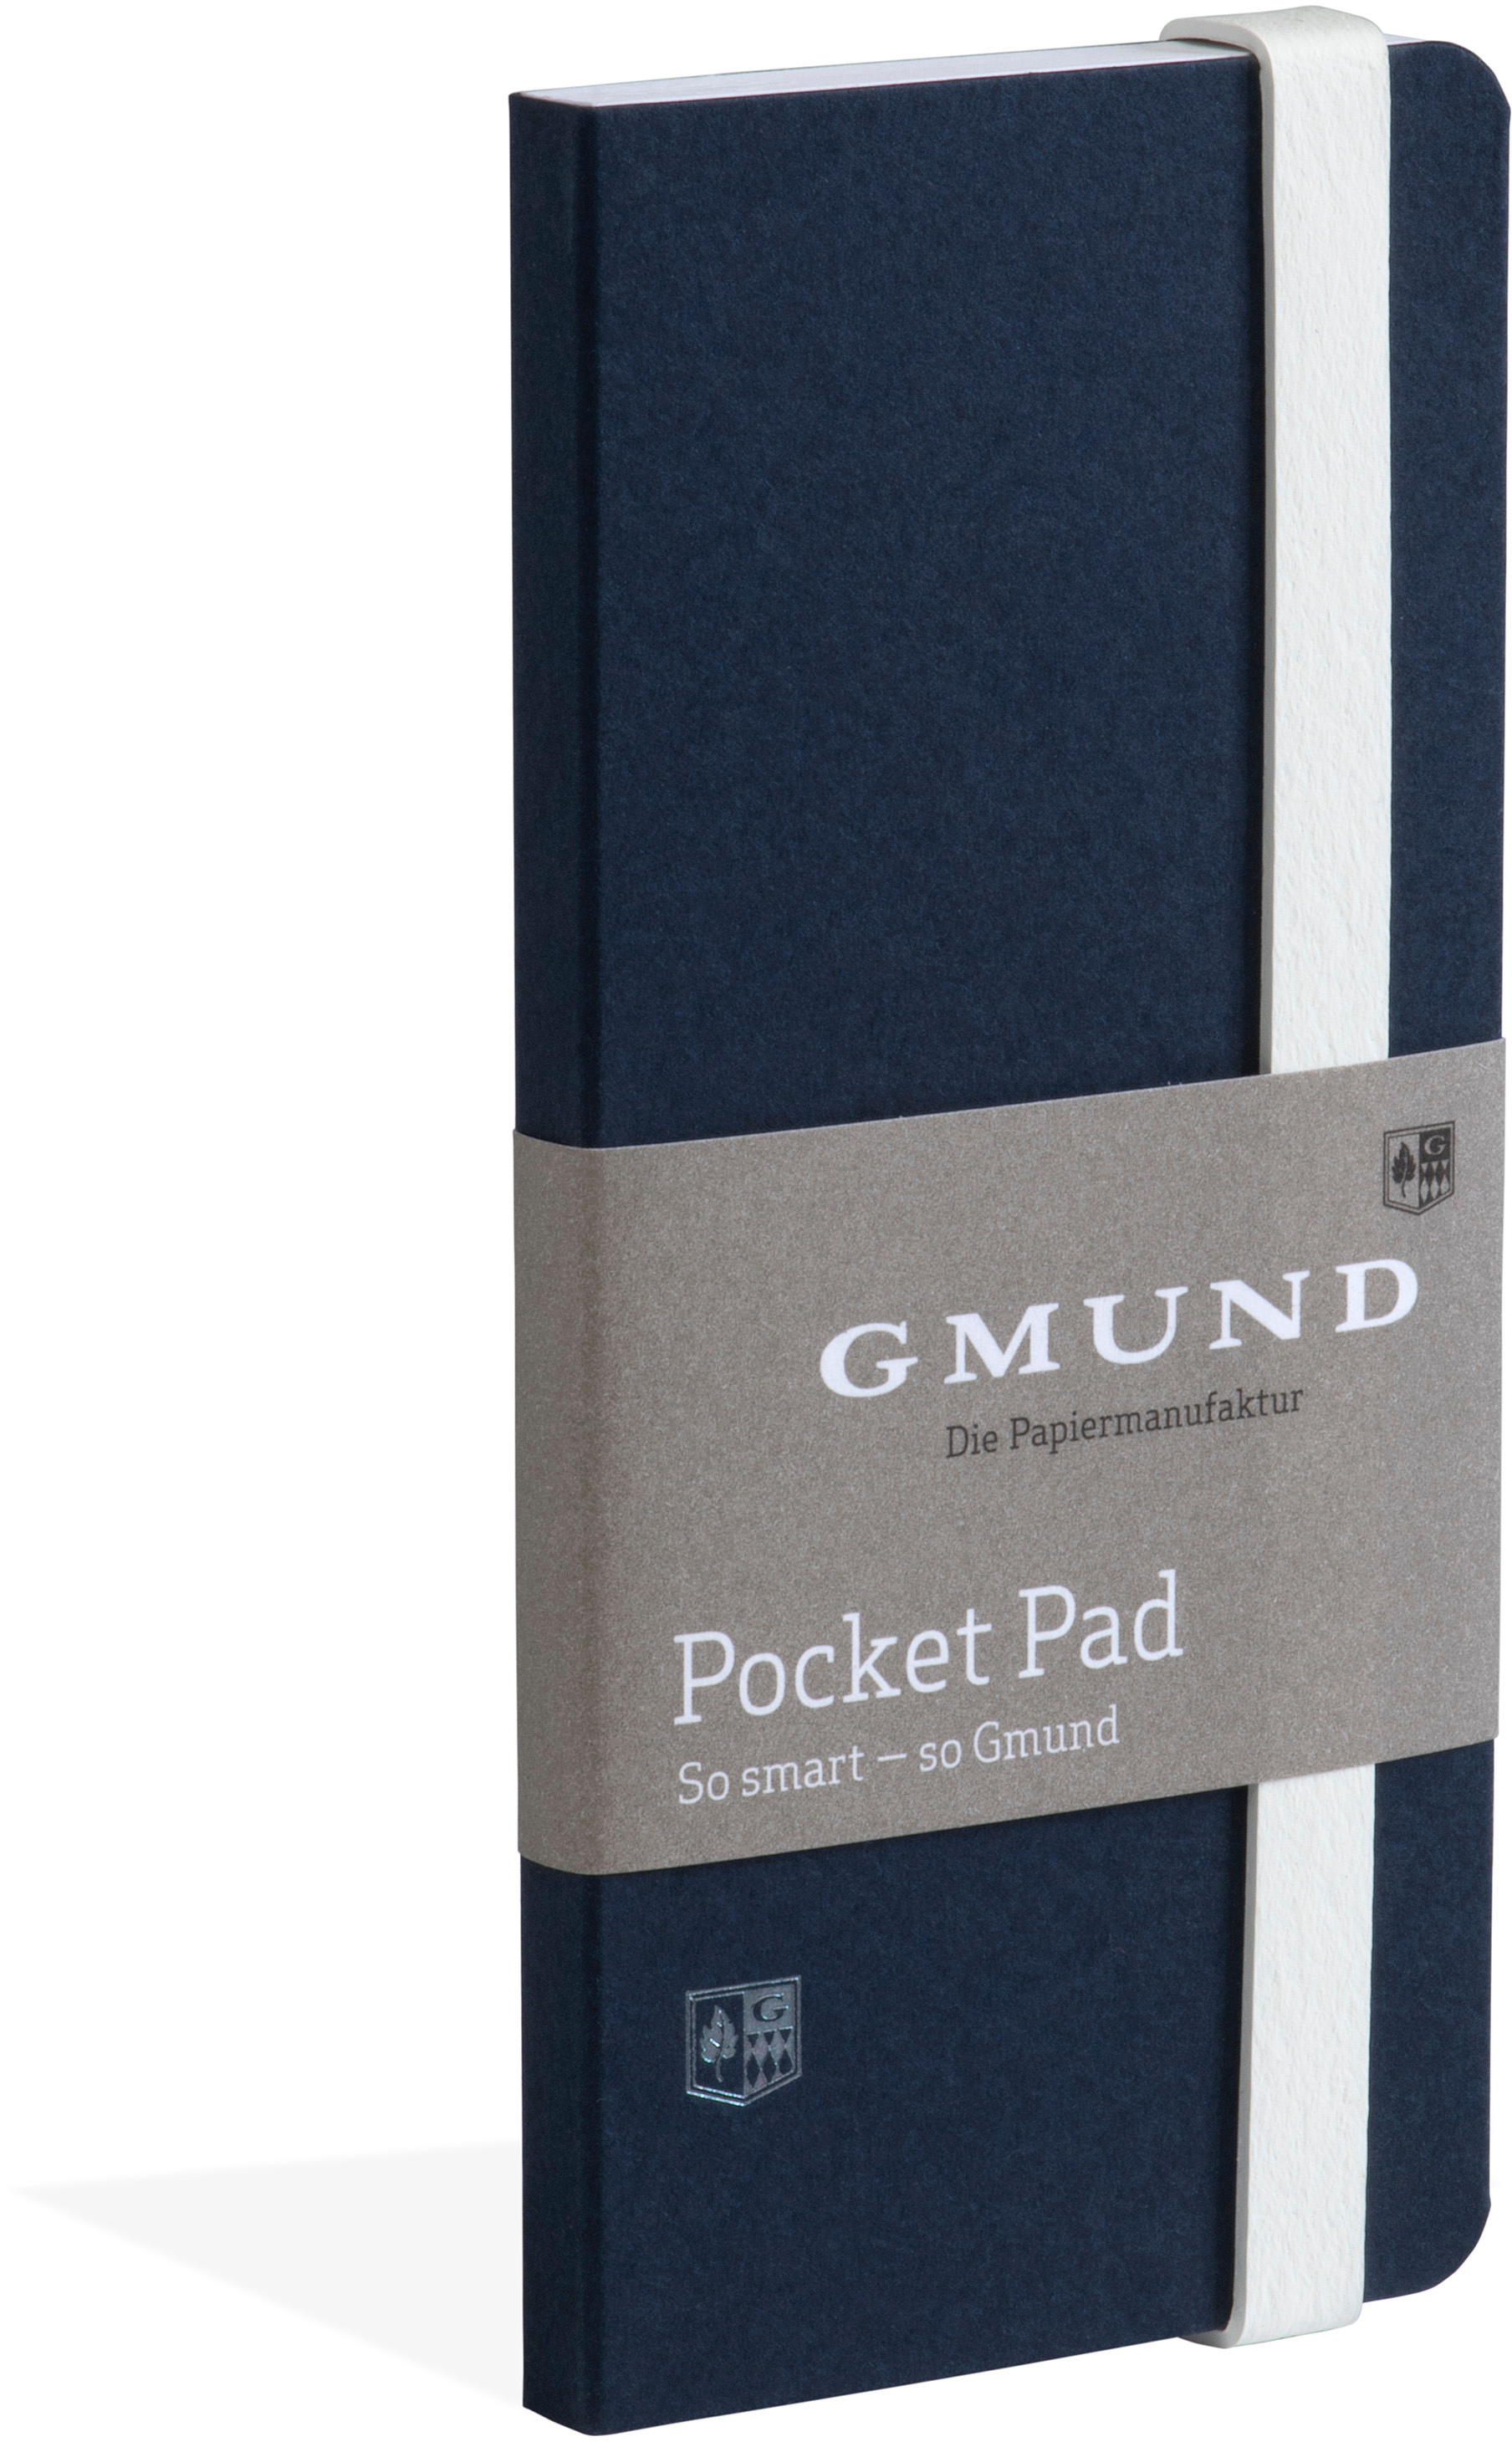 GMUND Pocket Pad 6.7x13.8cm 38787 midnight, blanko 100 pages